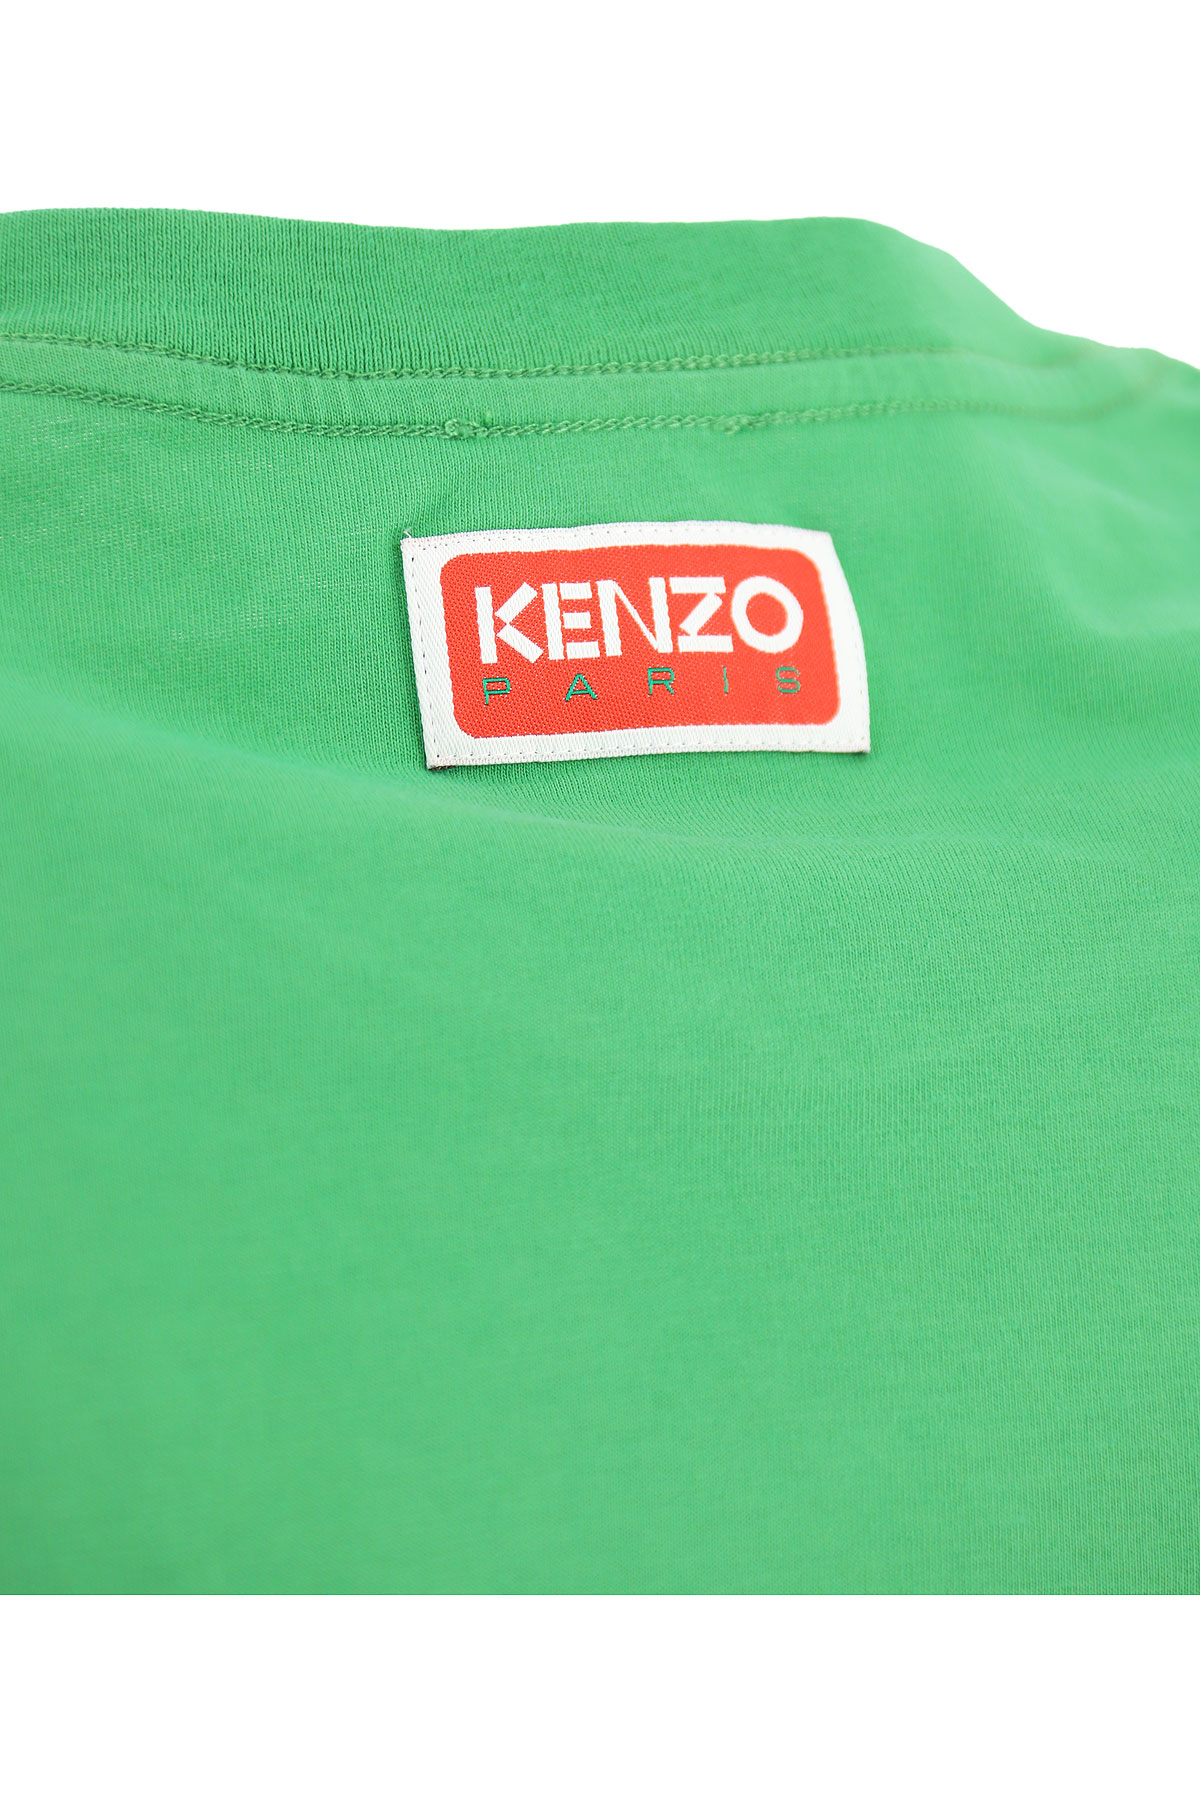 Mens Clothing Kenzo, Style code: pfd55ts4454s0-57-